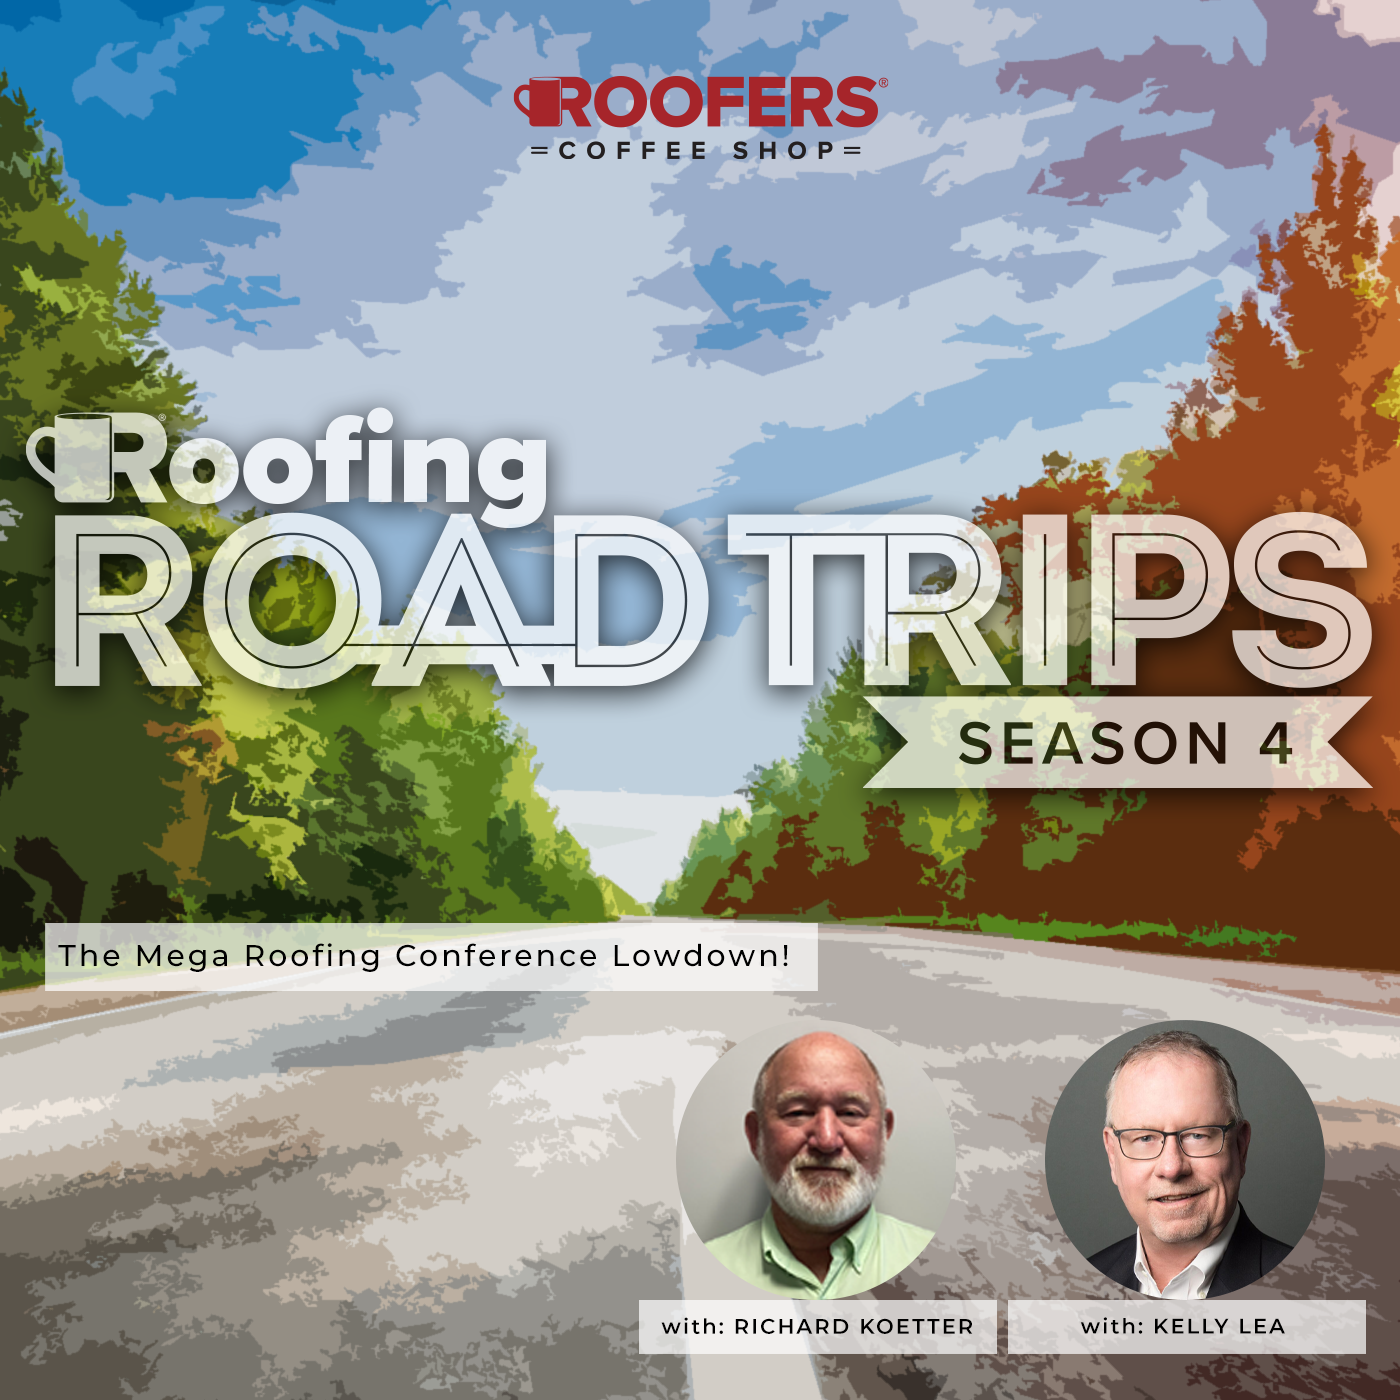 MRCA/RCAT - Richard Koetter & Kelly Lea - The Mega Roofing Conference Lowdown! - POD